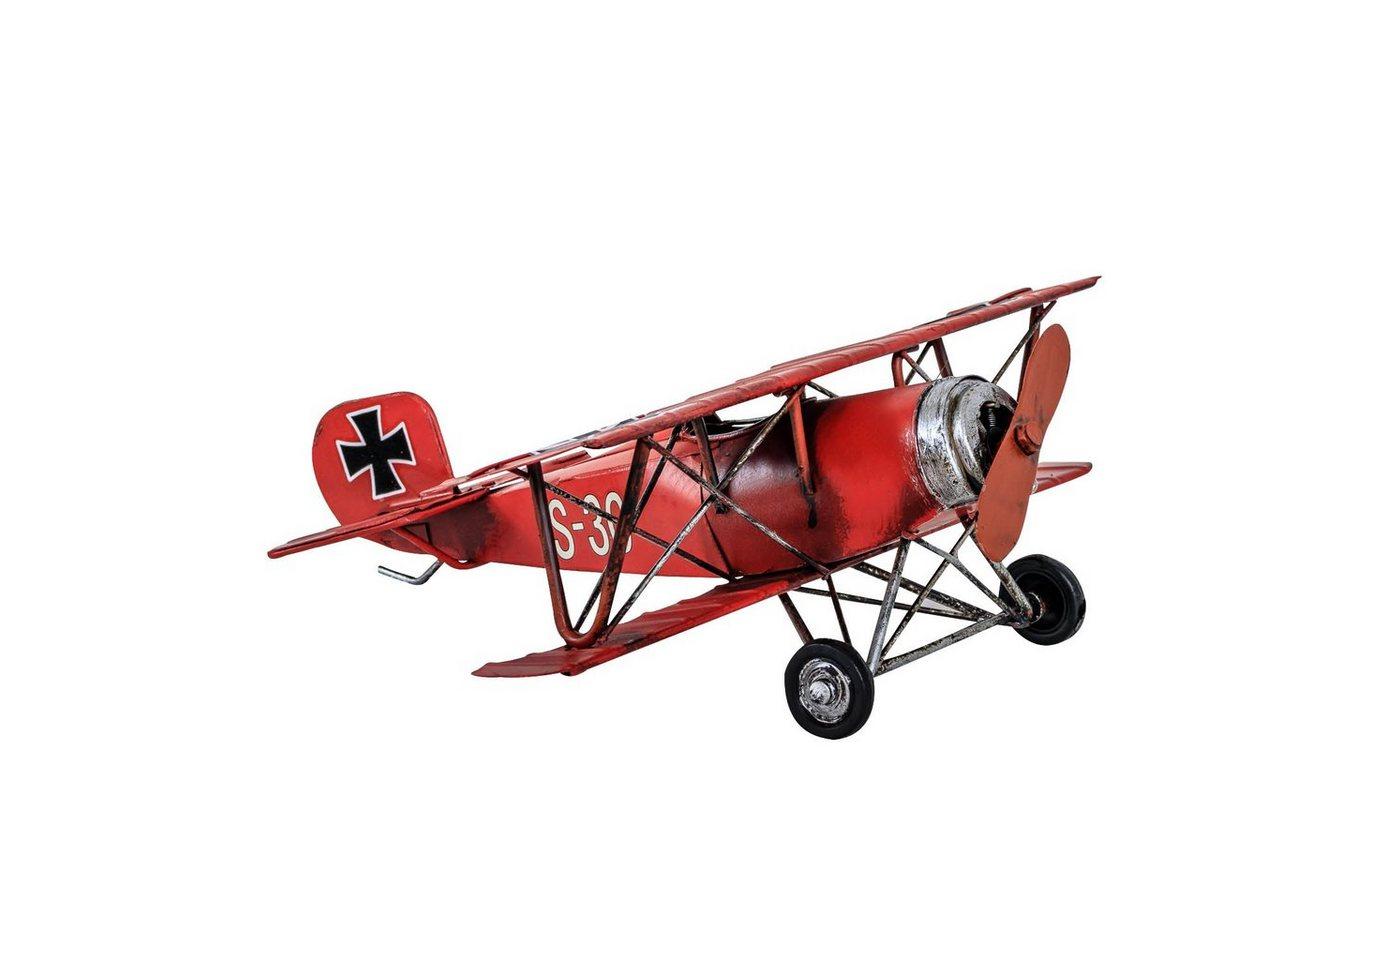 Aubaho Modellflugzeug Modellflugzeug roter Baron Flugzeug Modell Blech Metall Antik-Stil 25c